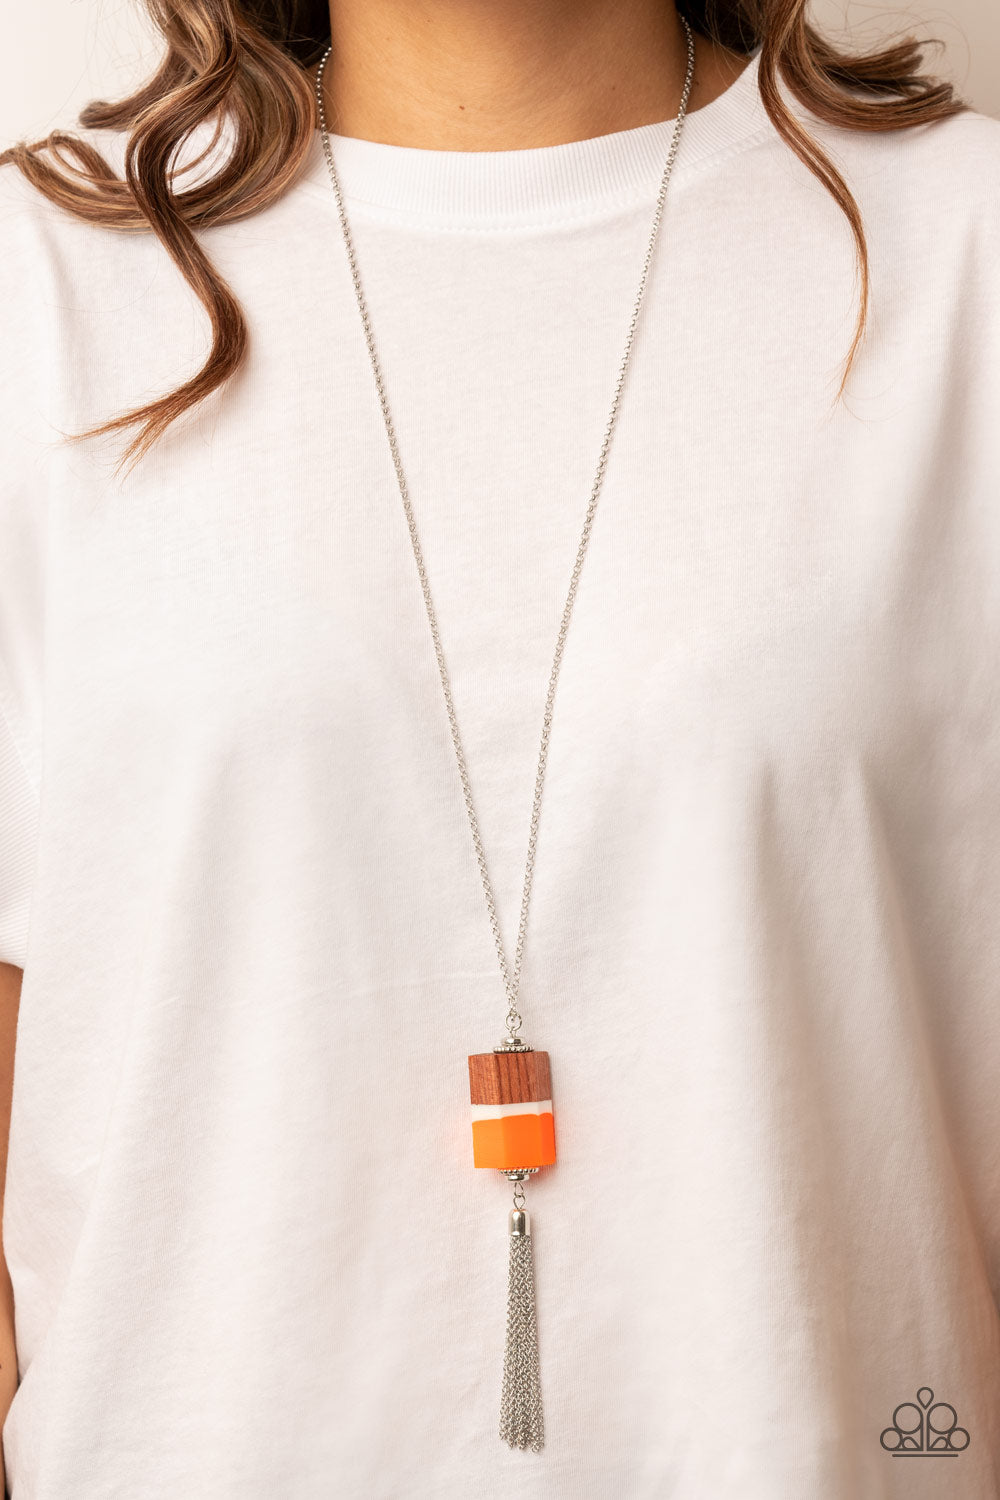 Reel It In Orange Necklace - Paparazzi Accessories